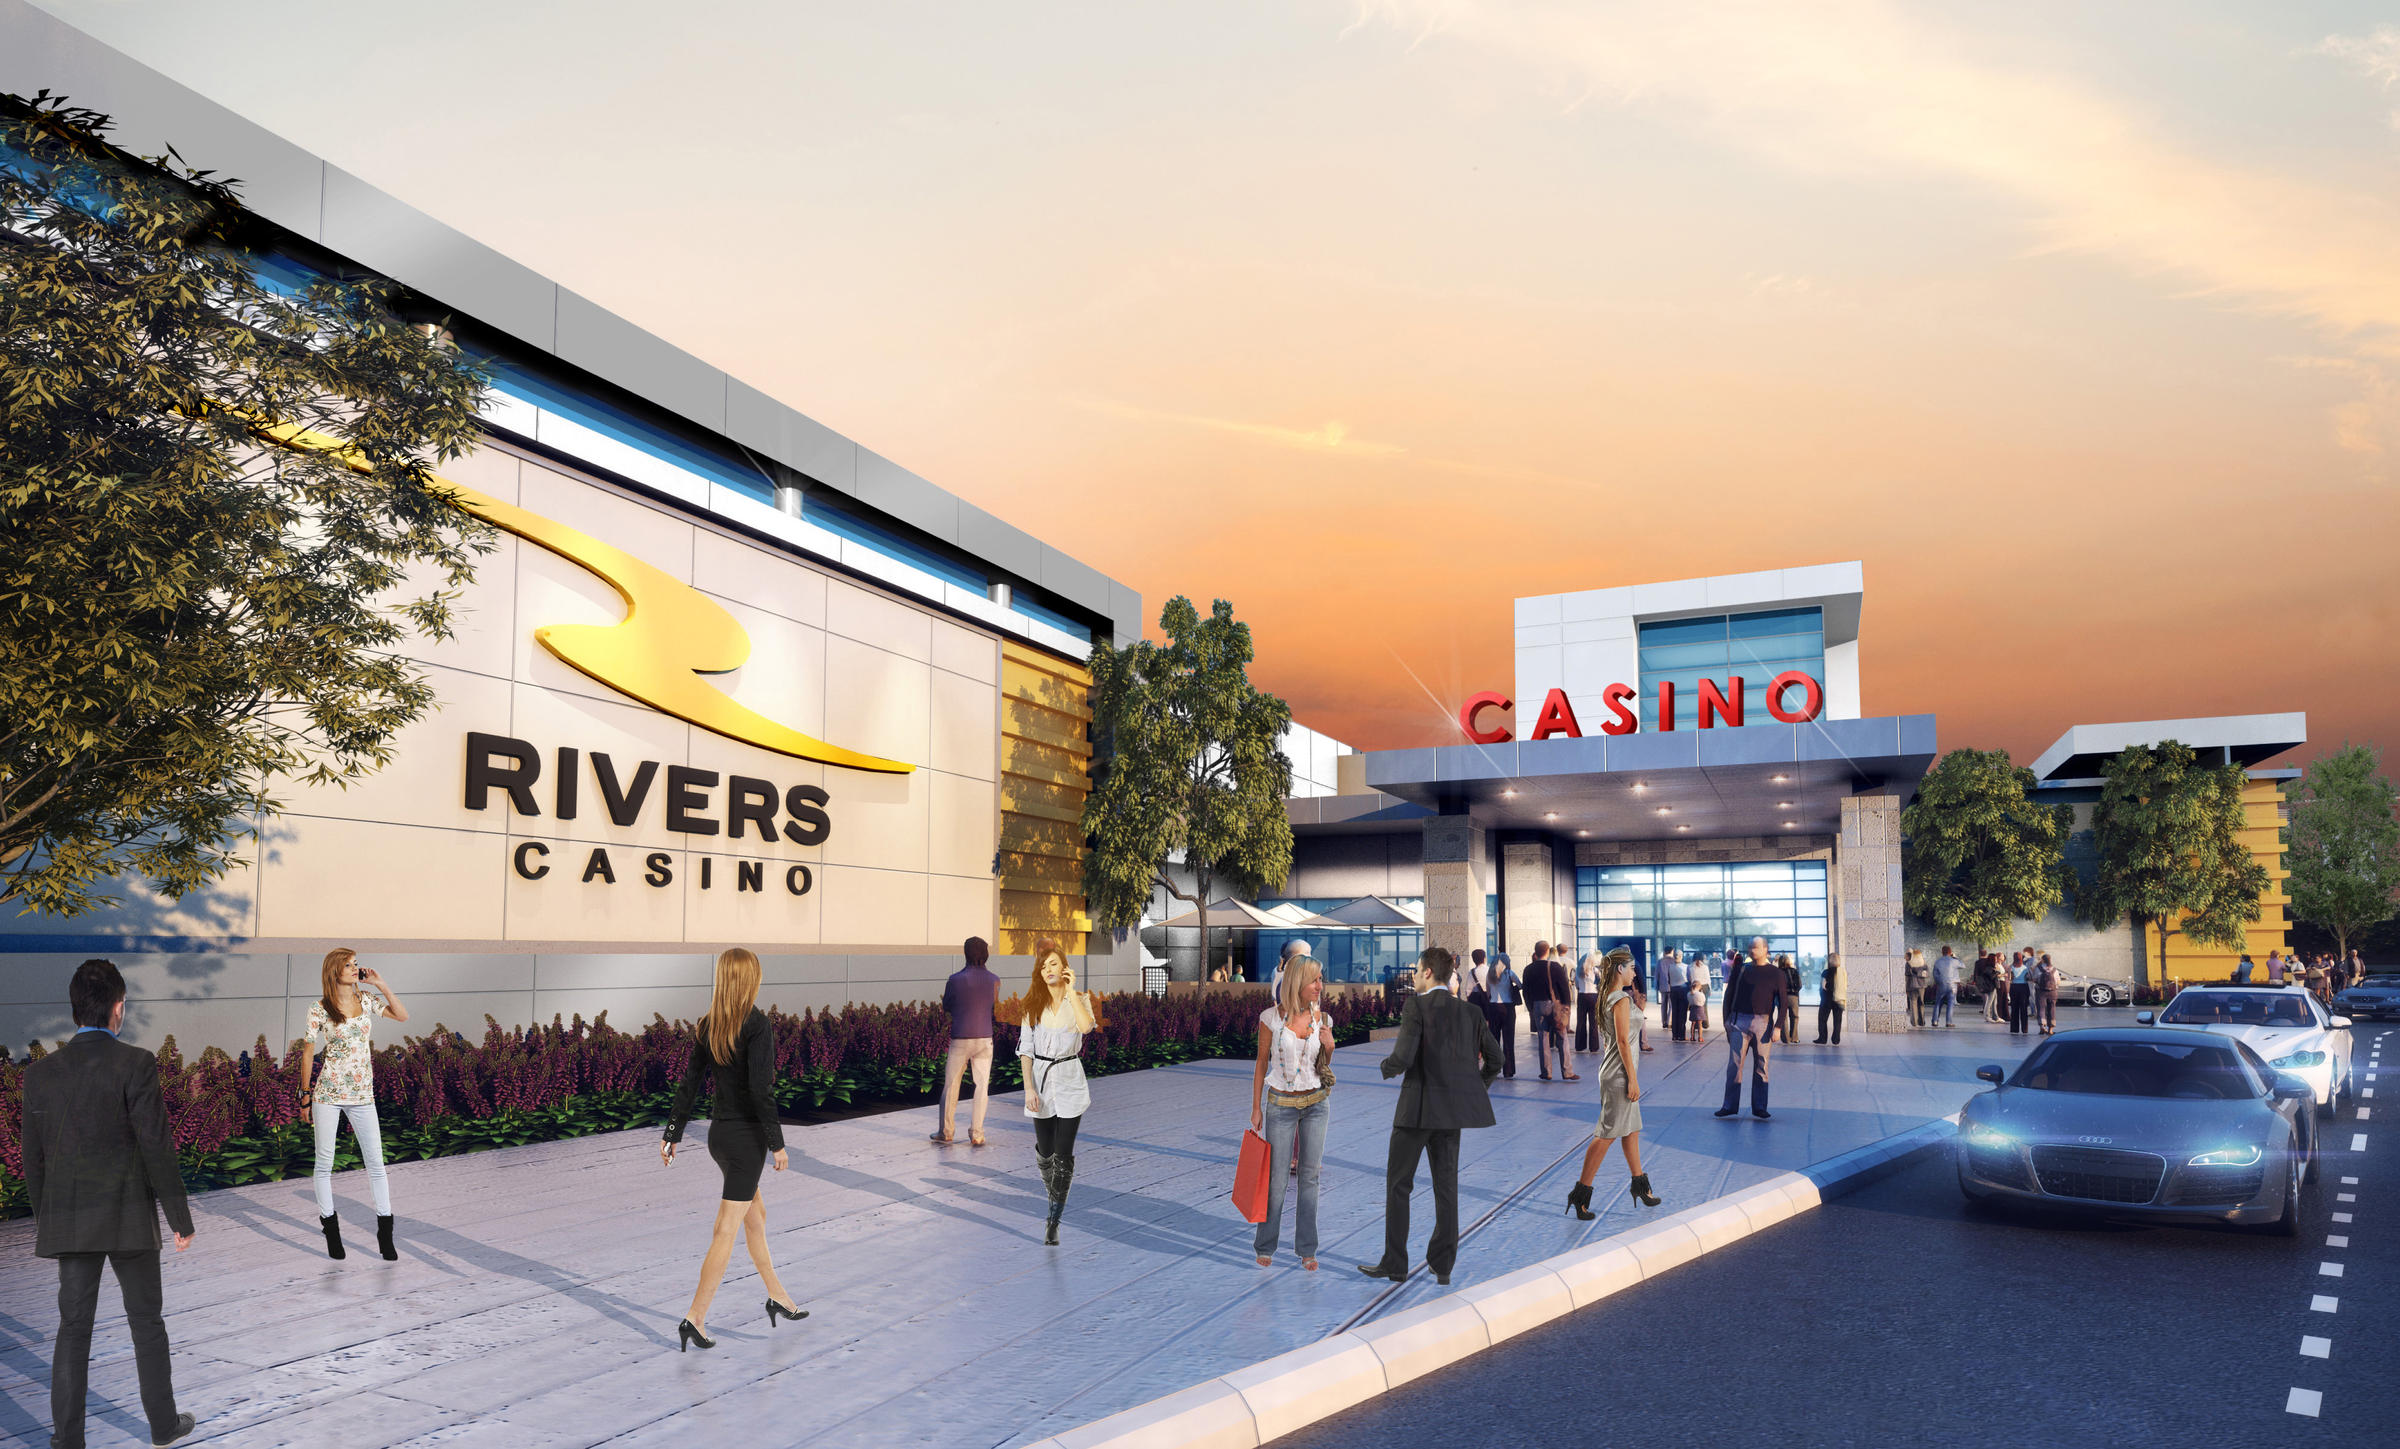 rivers casino event center schenectady ny